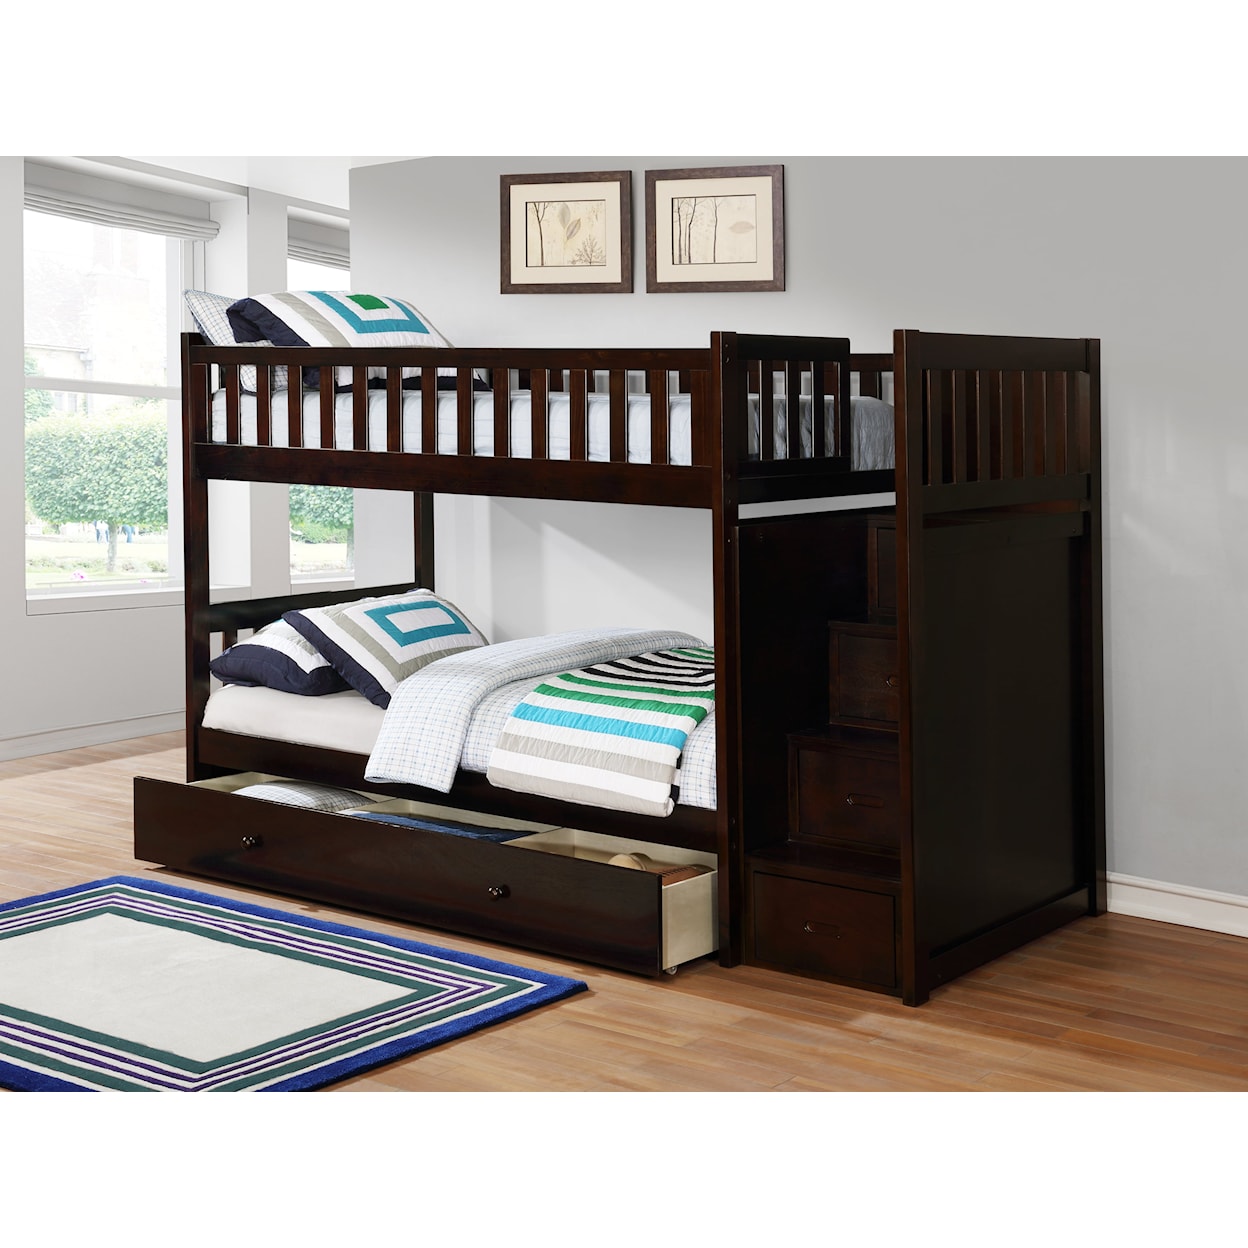 Alex's Furniture B802E Casual Twin Over Twin Bunk Bed